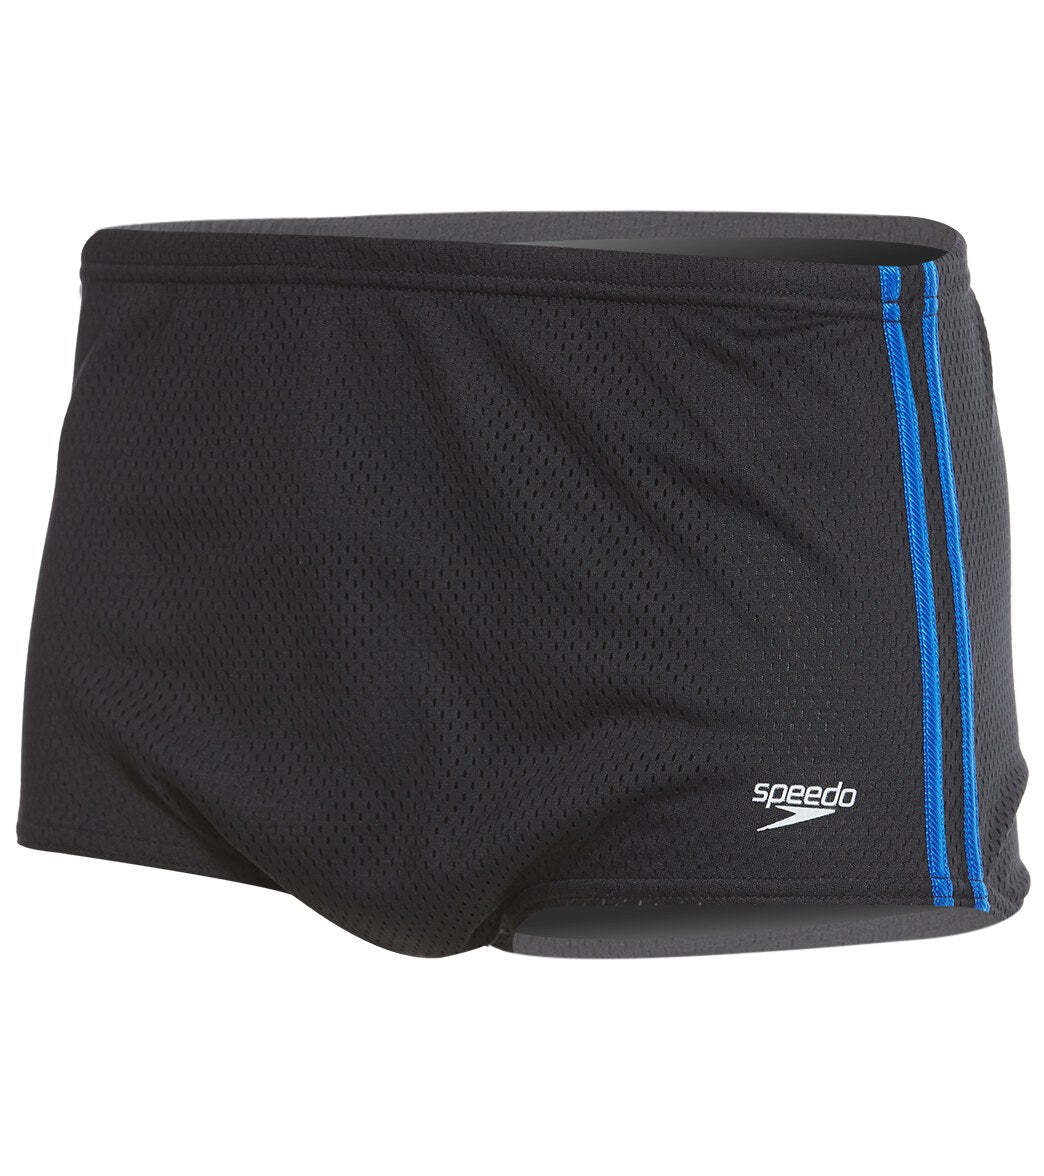 Speedo Black/Blue Size 28 Poly Mesh Square Leg Swimsuit